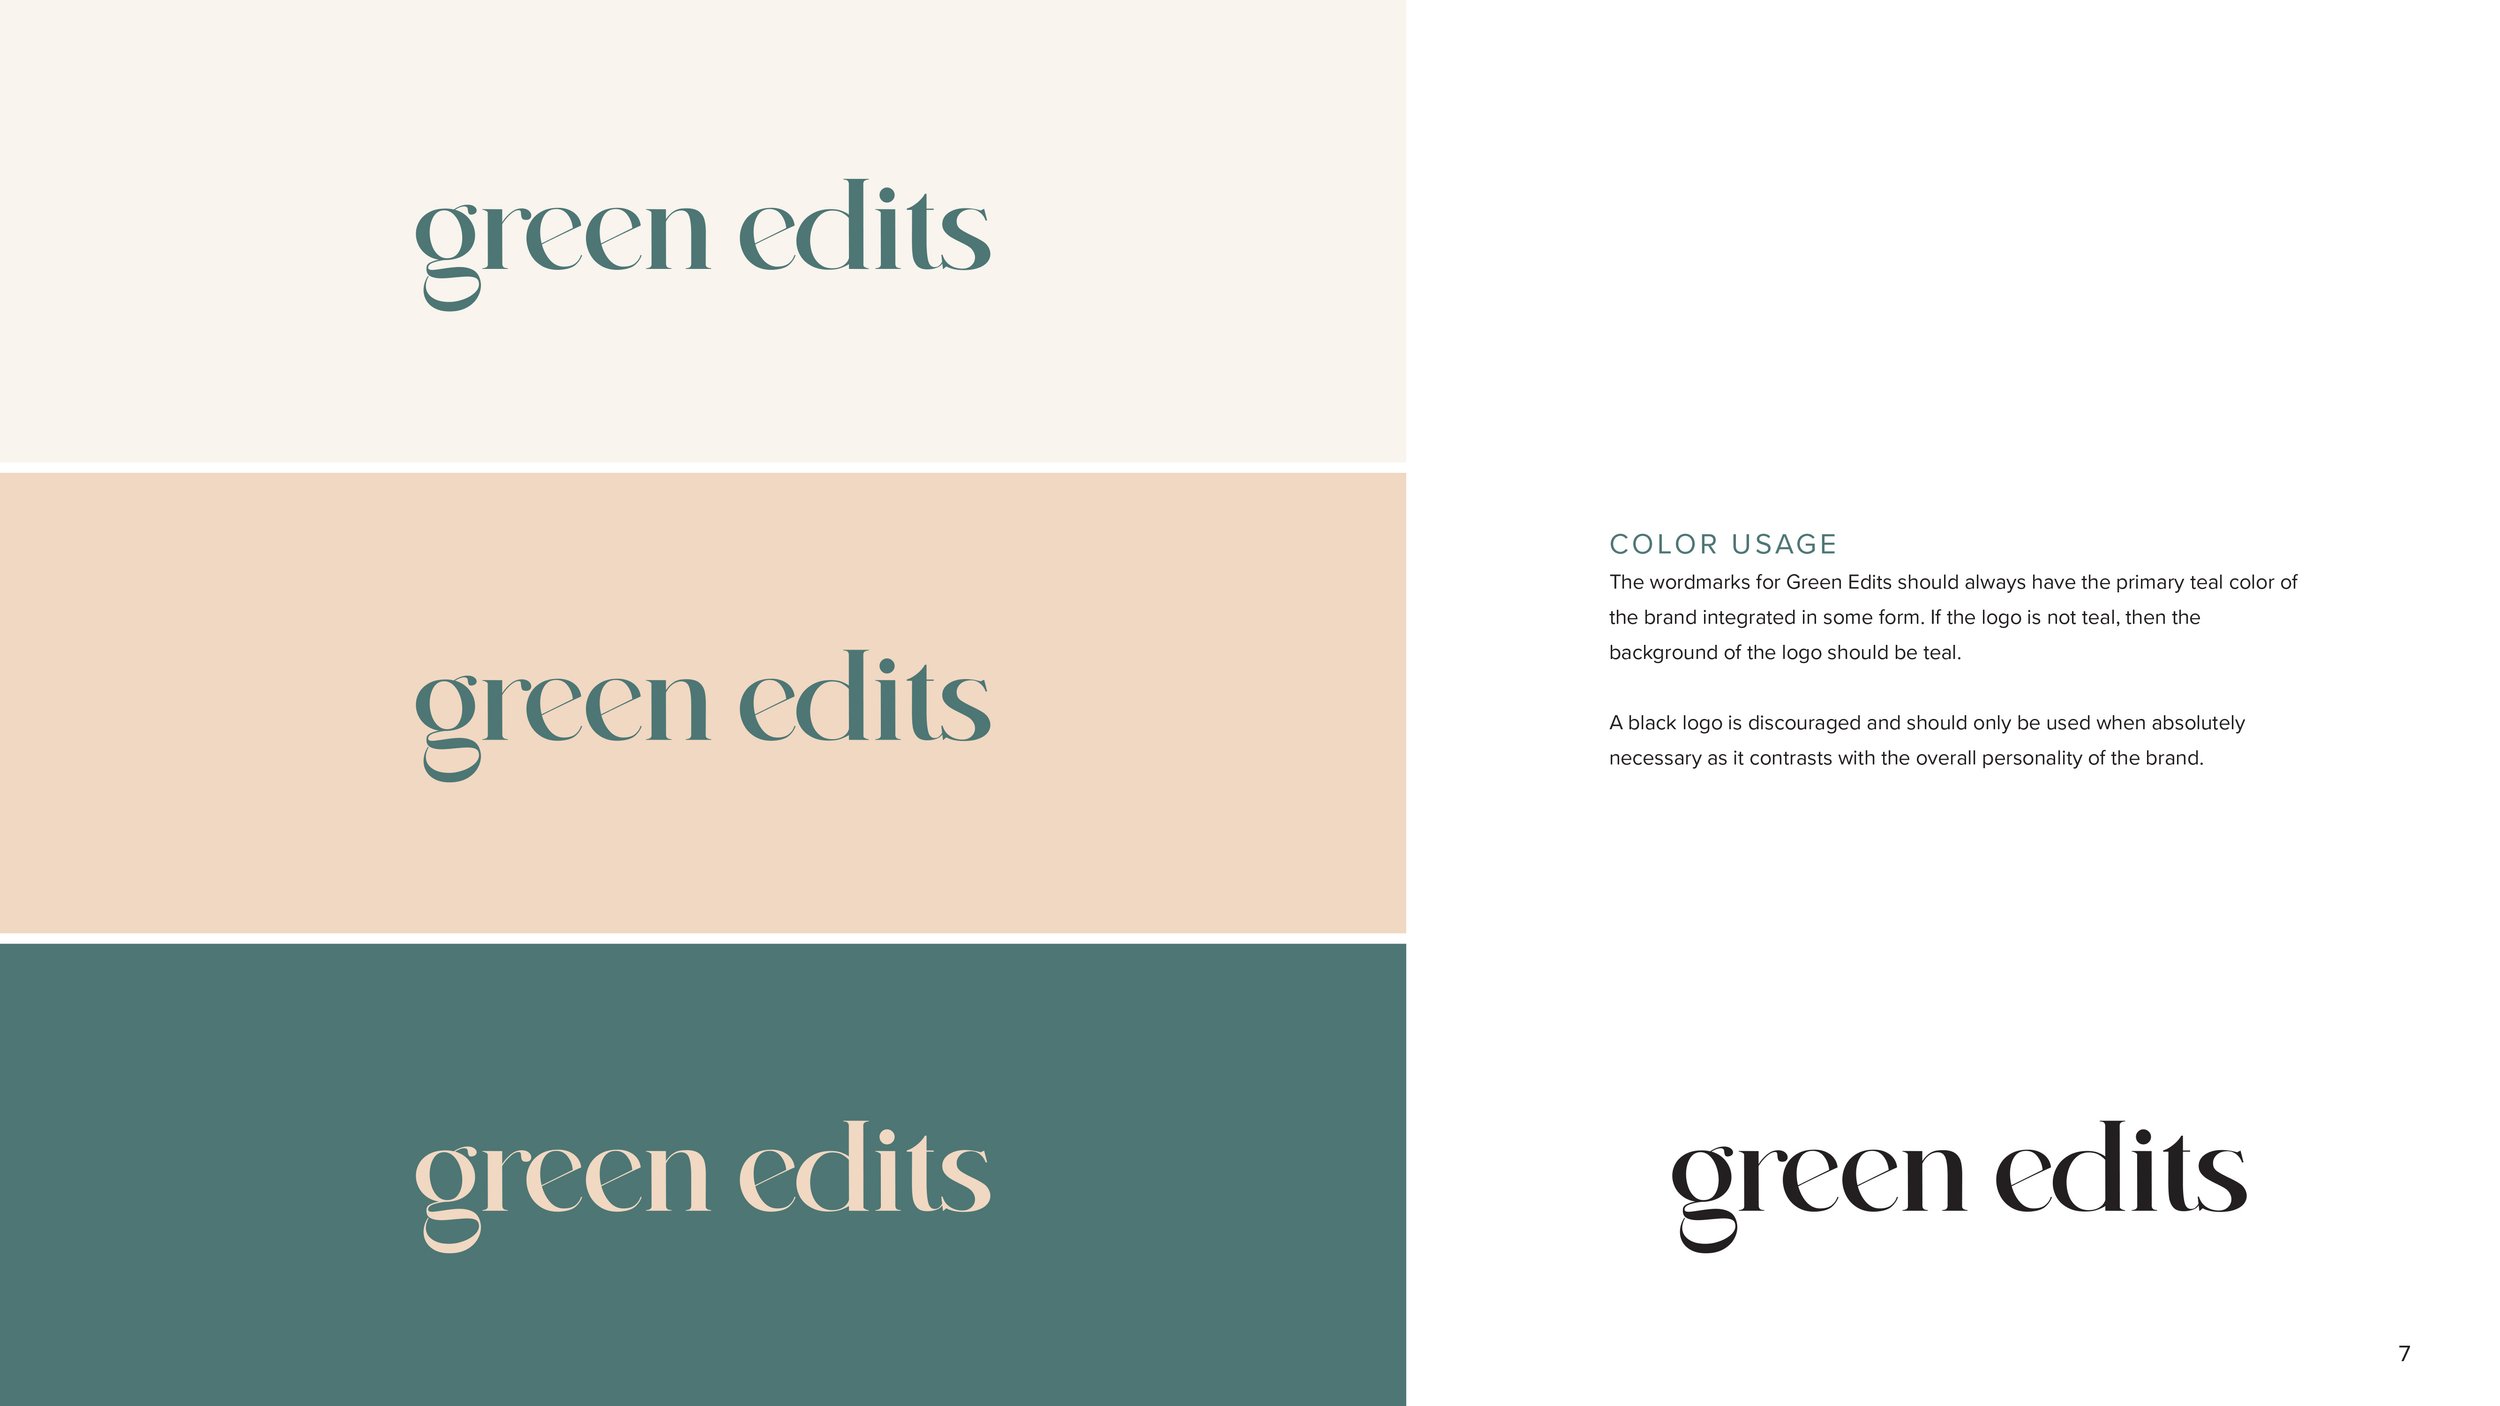 GreenEdits_Branding_Guidelines-7.jpg